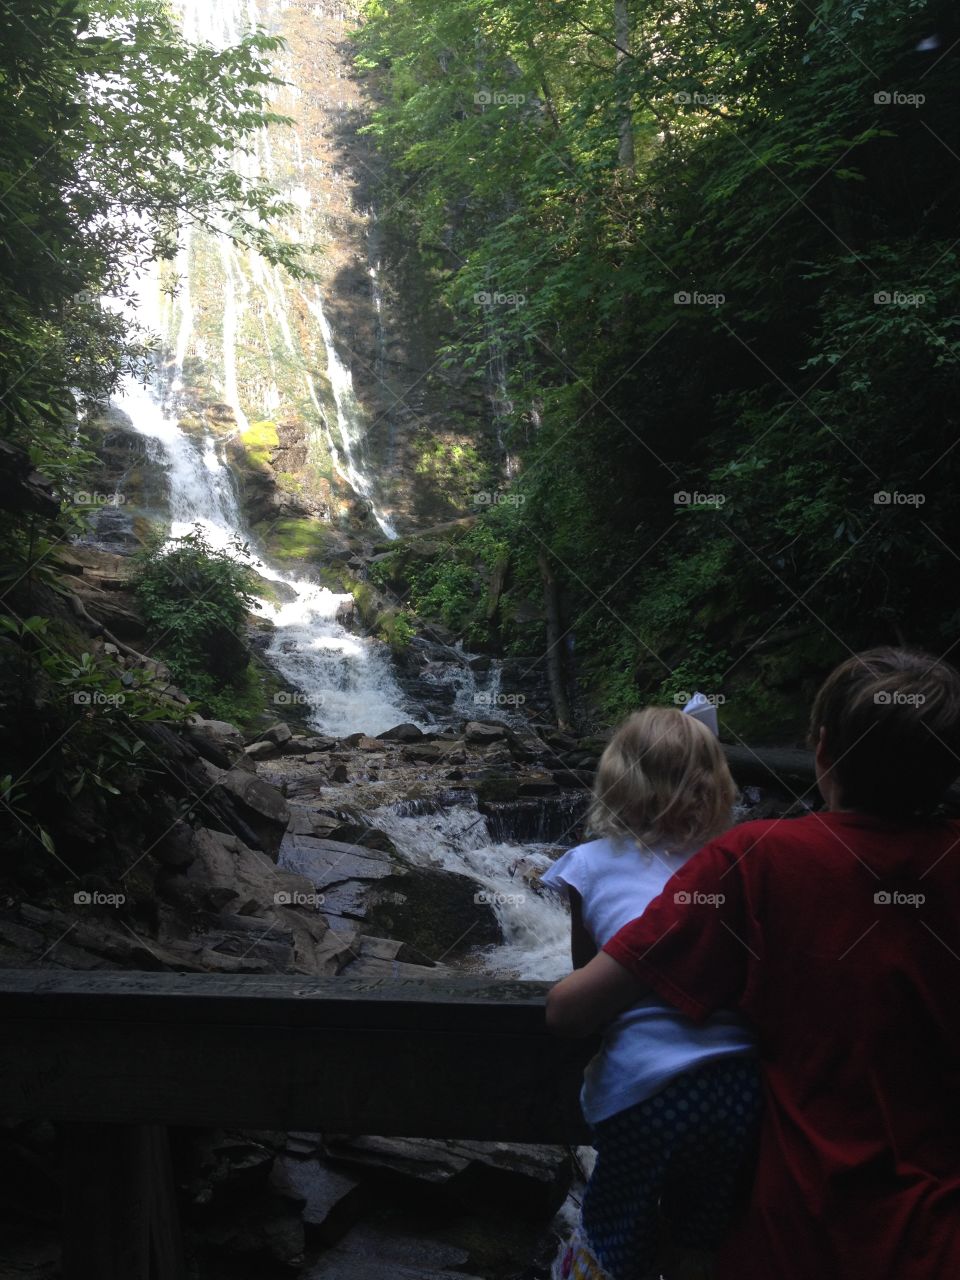 Mingo Falls in North Carolina